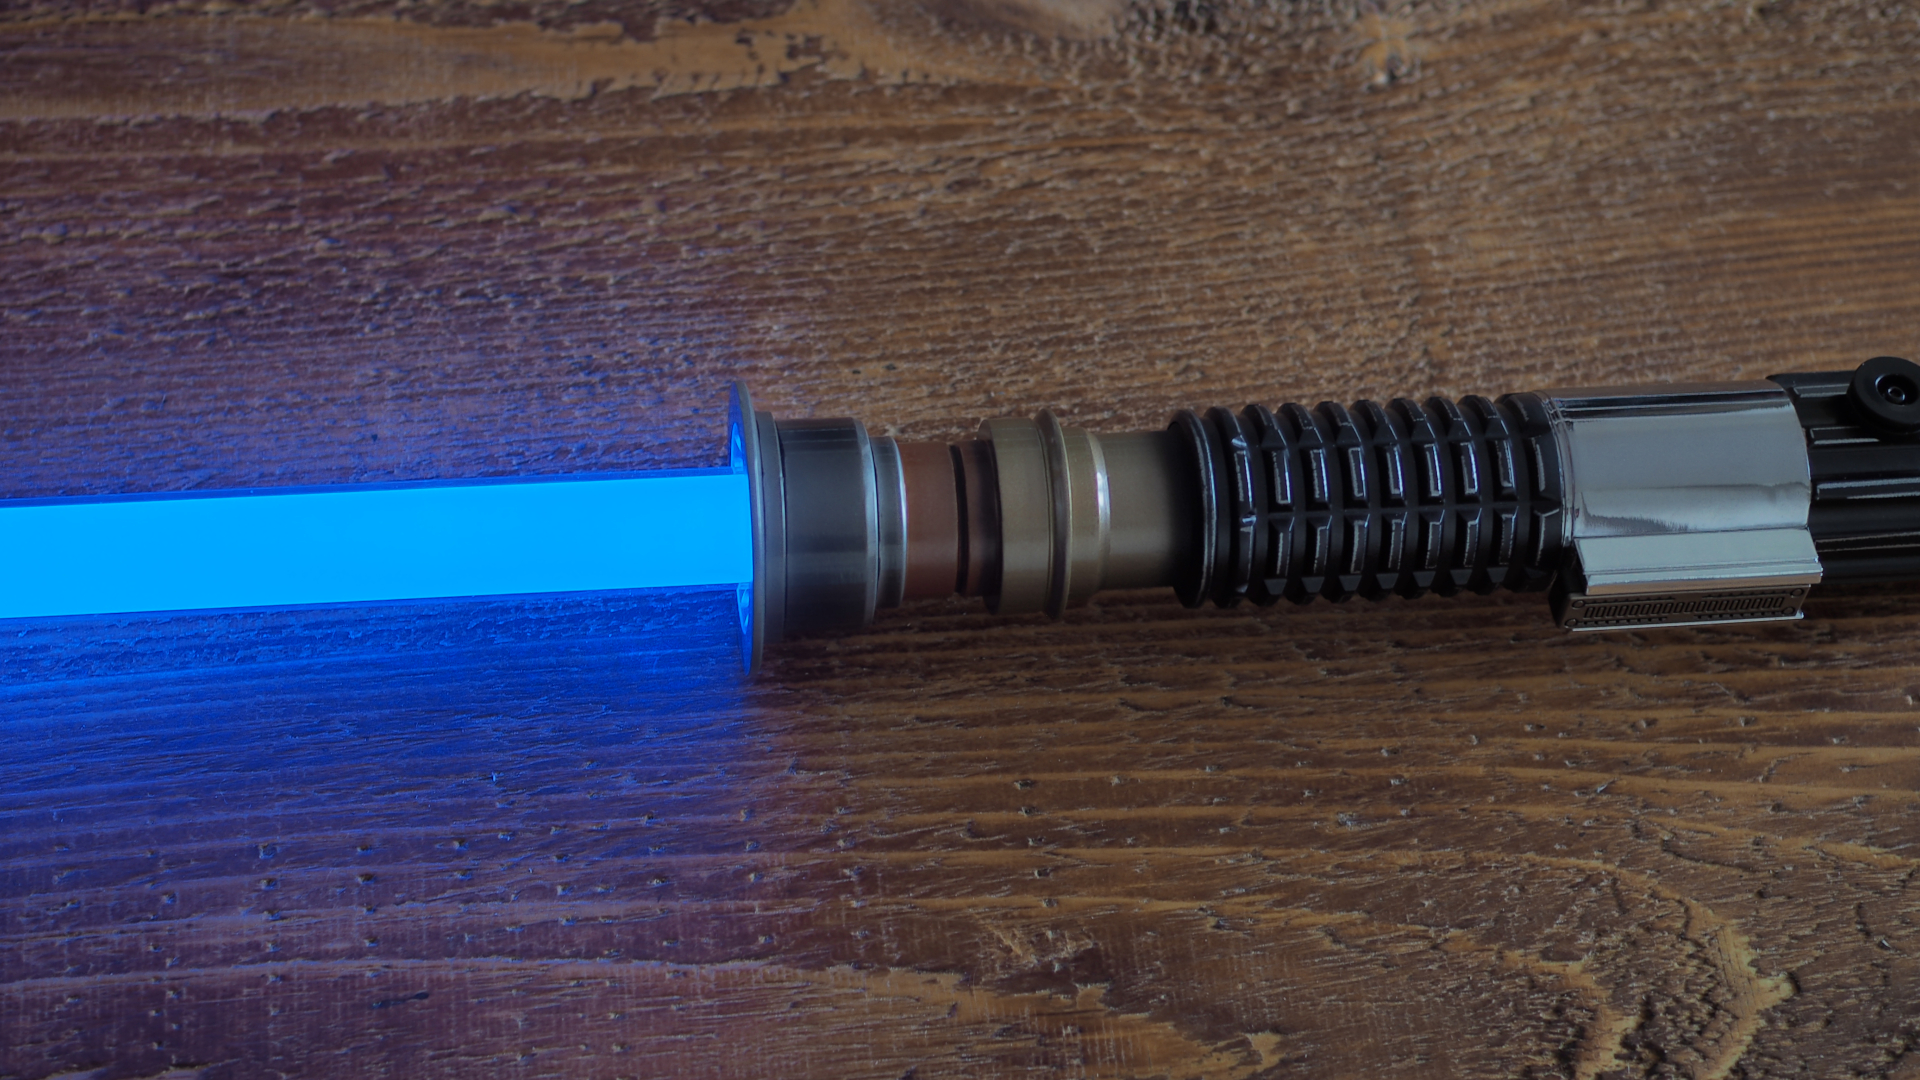 Close up of the Obi-Wan Kenobi Force FX Elite lightsaber with the blade illuminated.